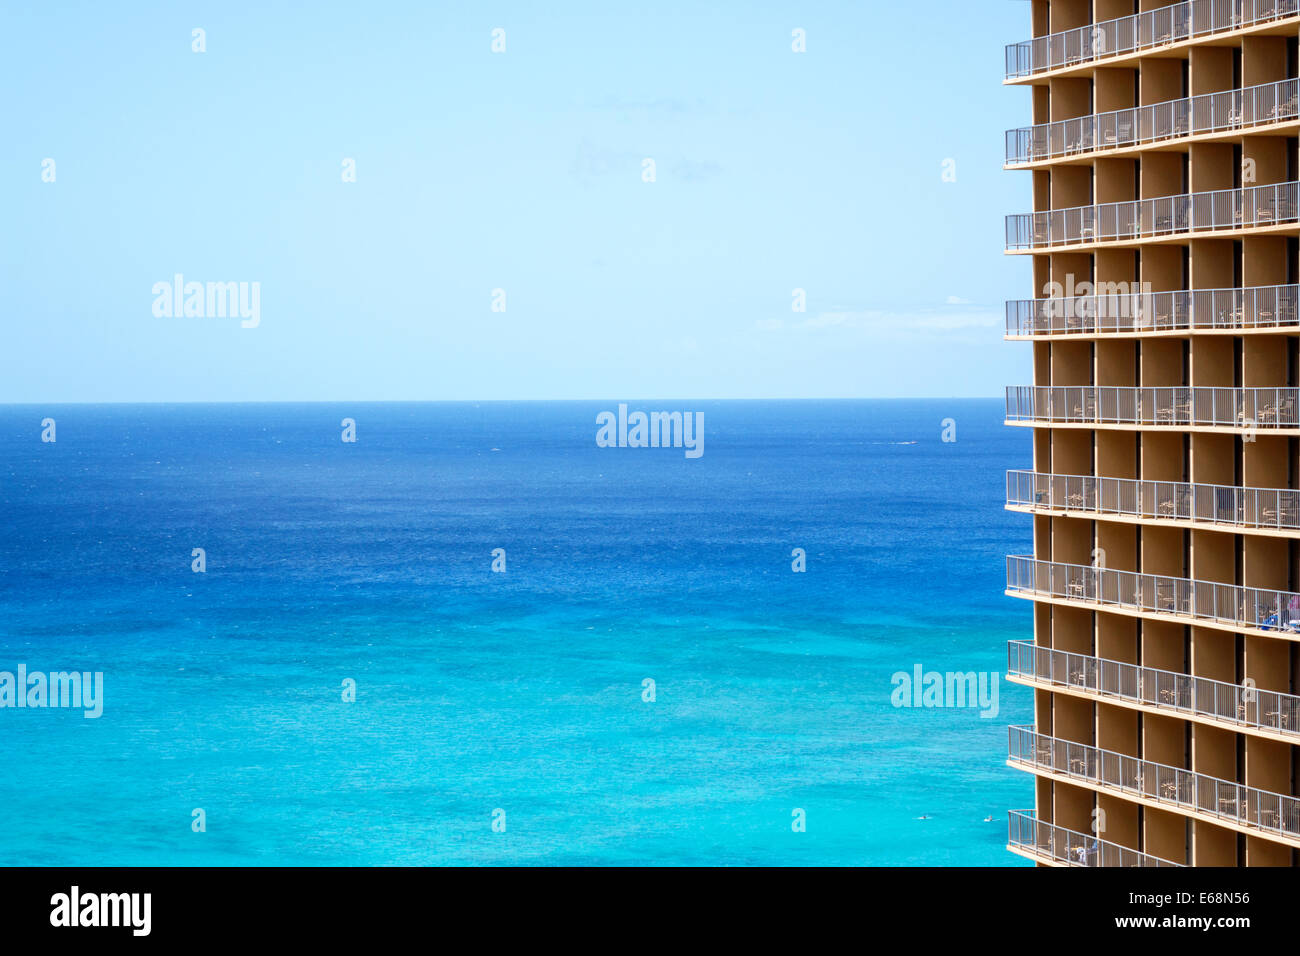 Honolulu Hawaii,Oahu,Hawaiian,Waikiki Beach,resort,Pacific Ocean,Pacific Beach,hotel,hotel,hotels,high rise,building,balconies,sky,blue,USA,US,United, Stock Photo